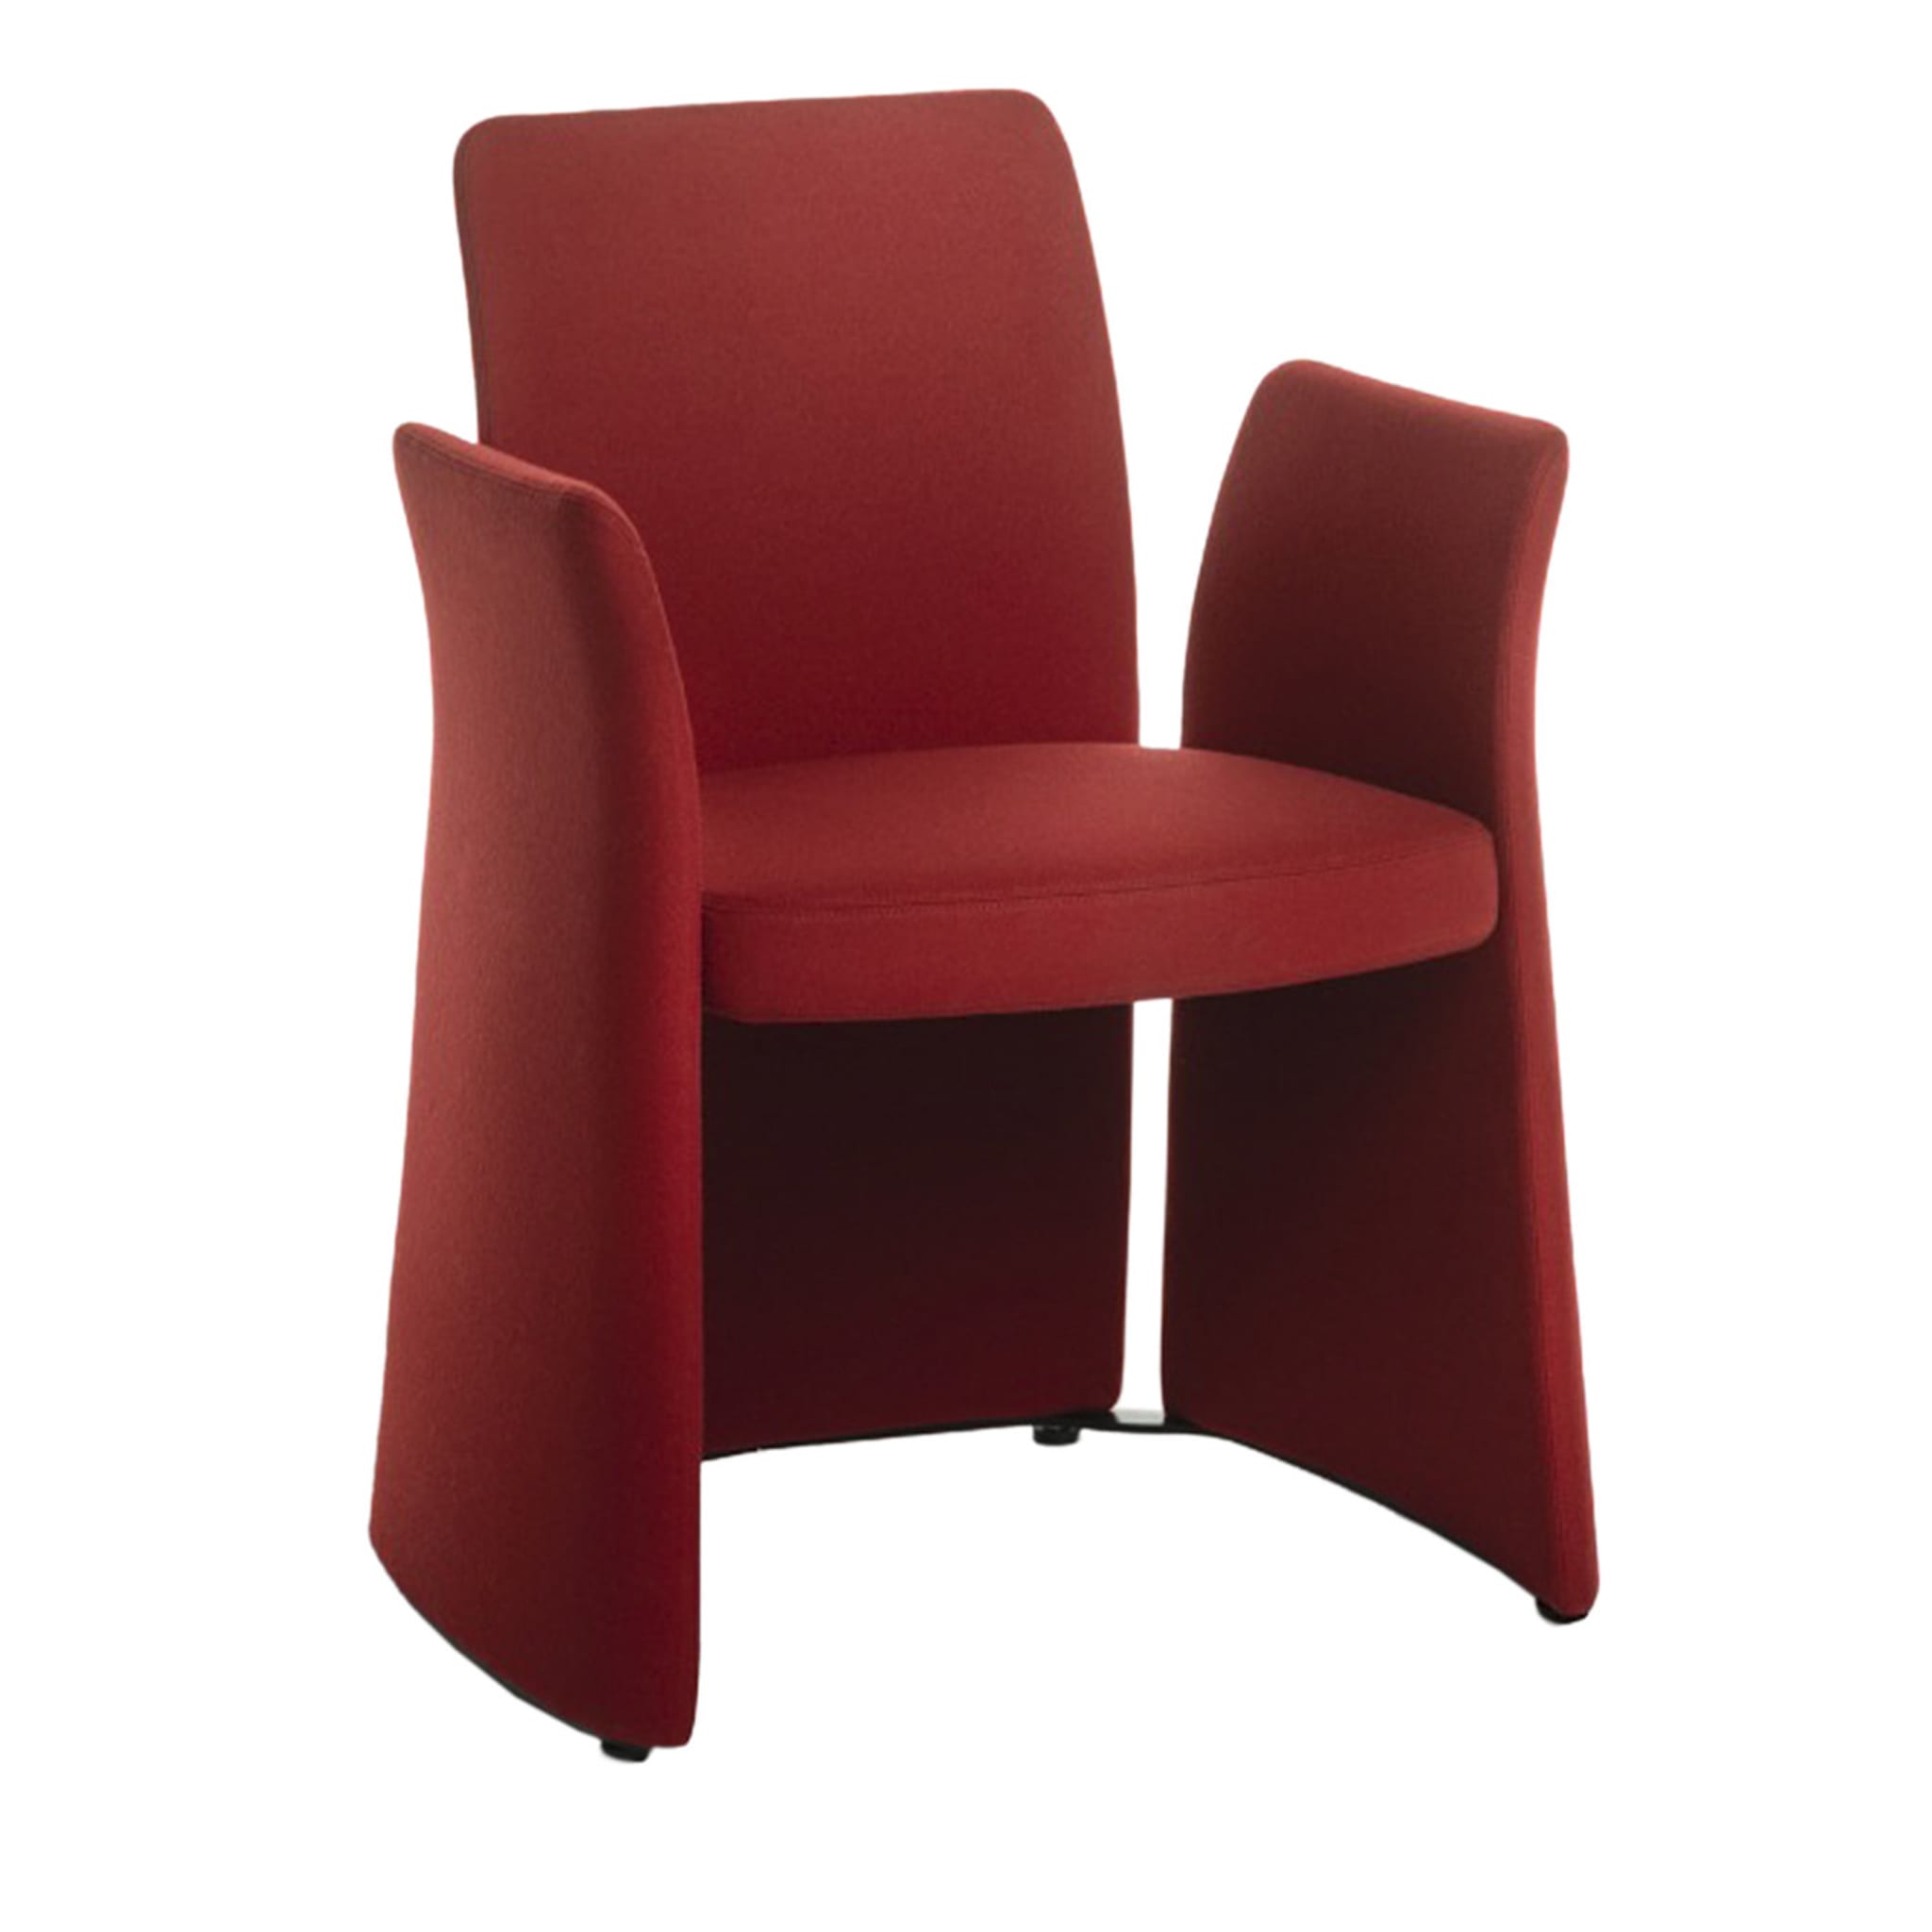 Madam Red Armchair by Radice Orlandini designstudio - Main view